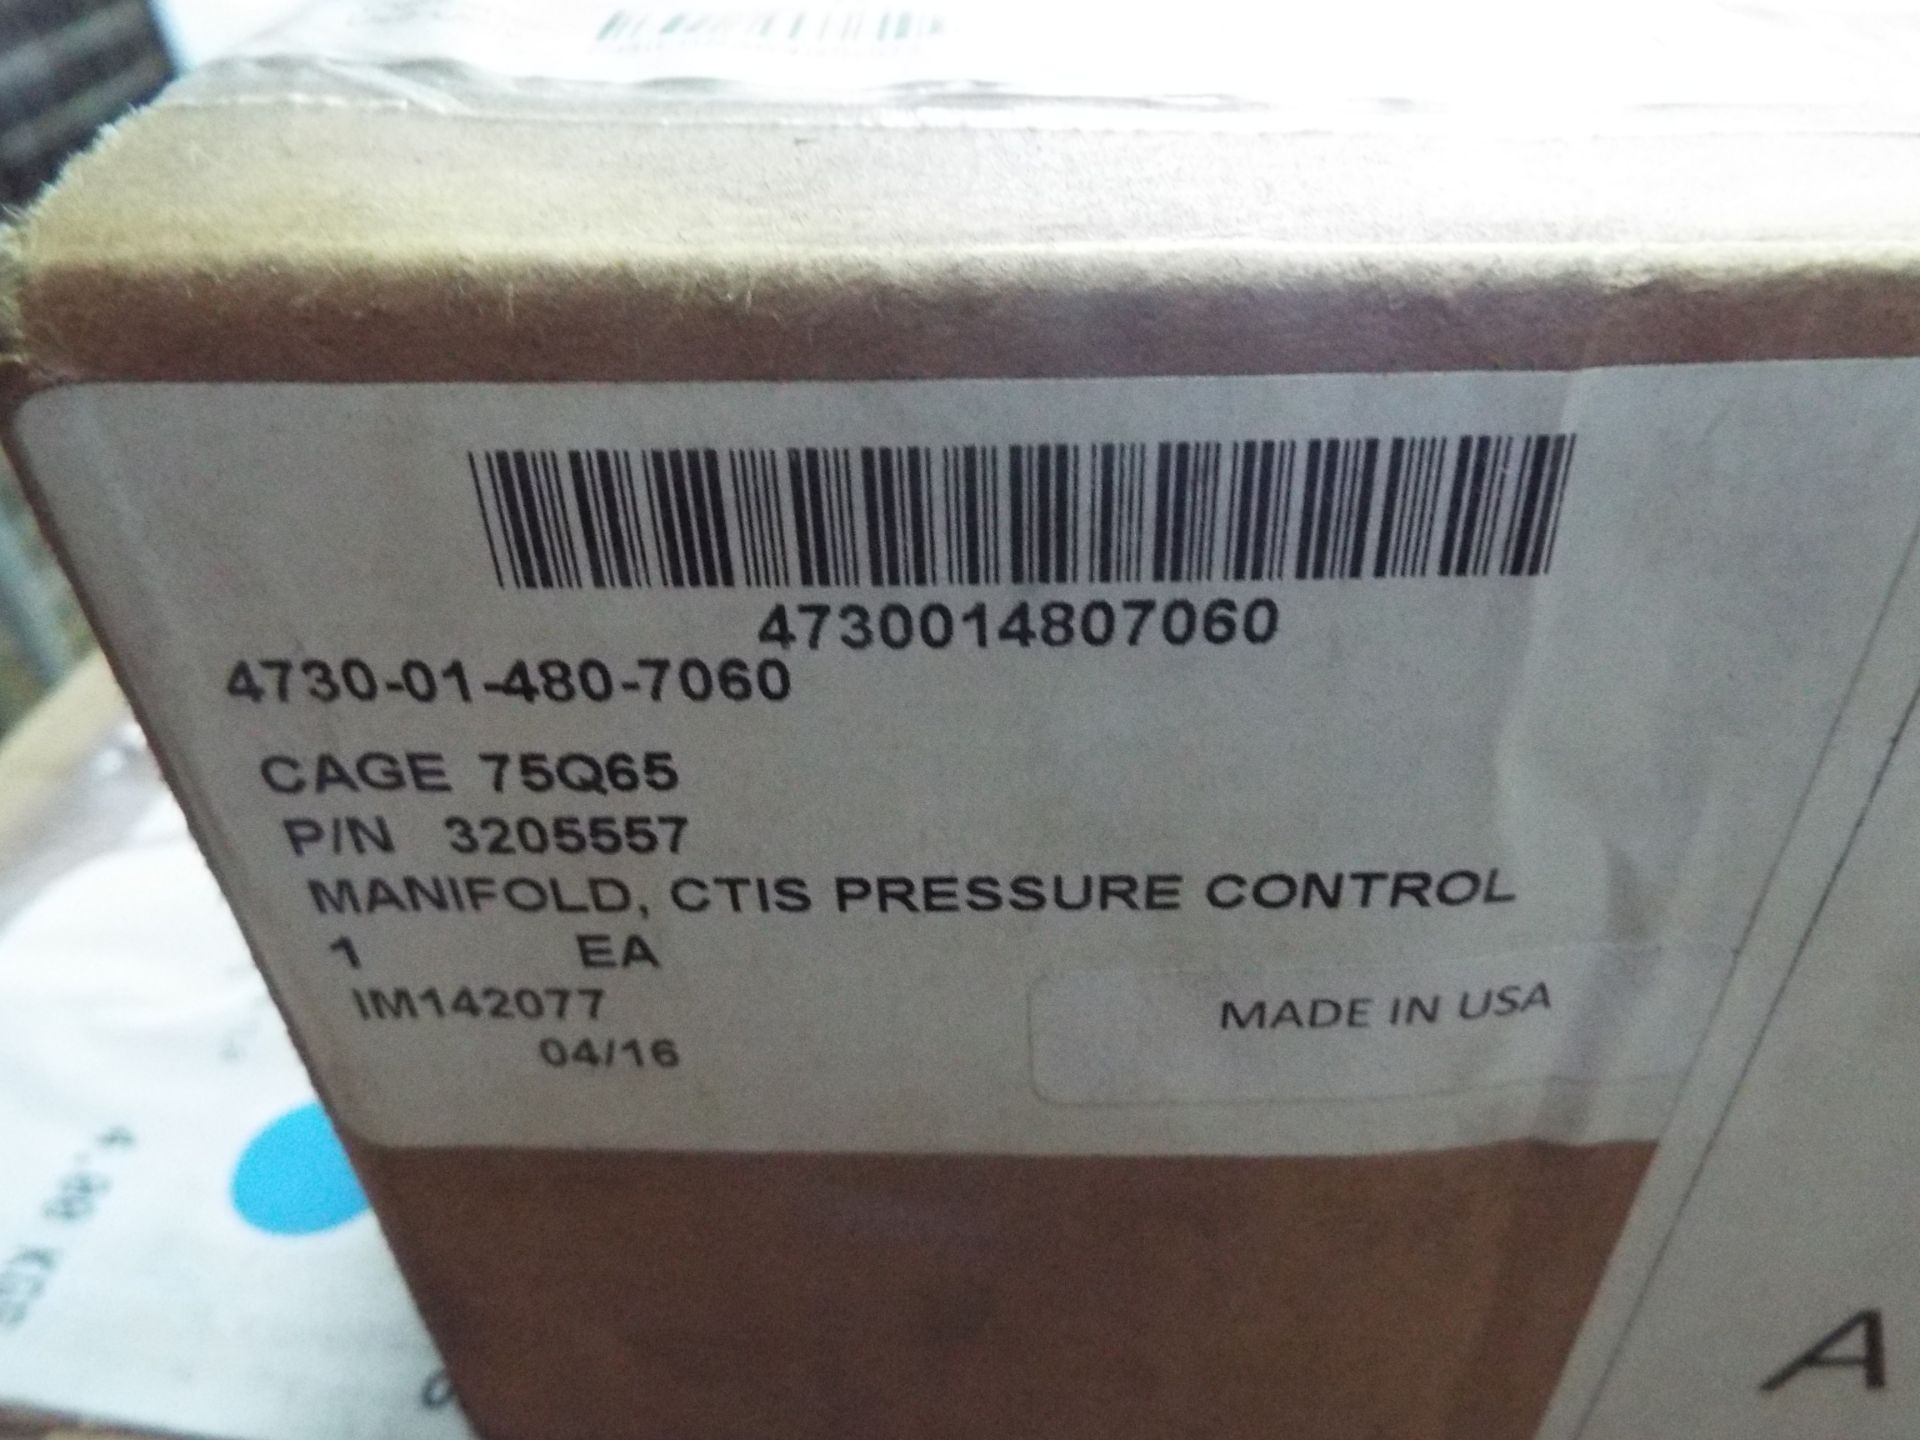 5 x Pressure Control Manifold P/No 3205557 - Image 5 of 6